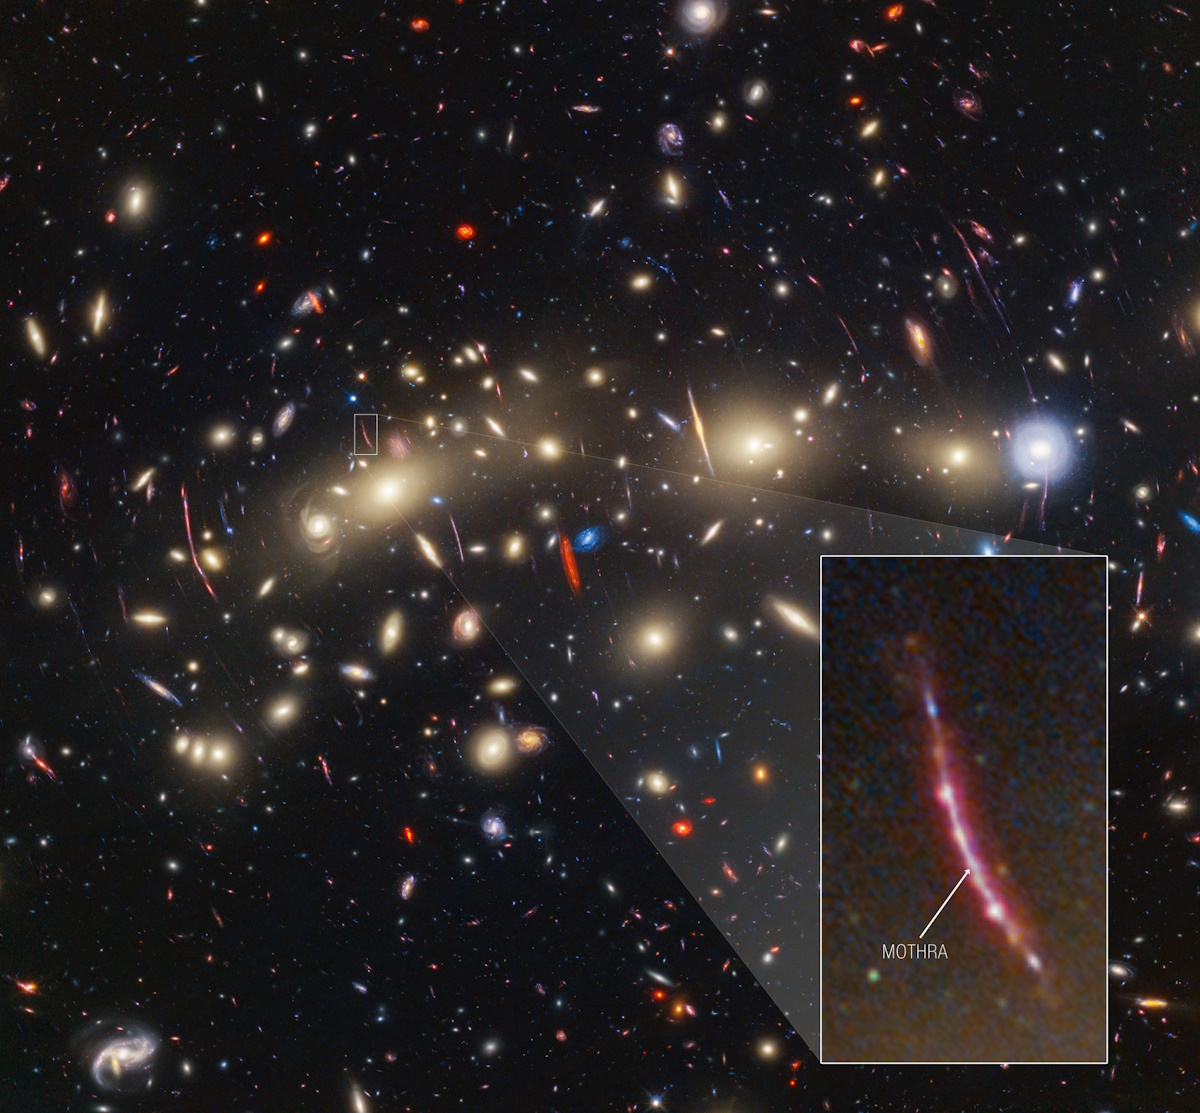 galassia MACS0416 a colori hubble e webb